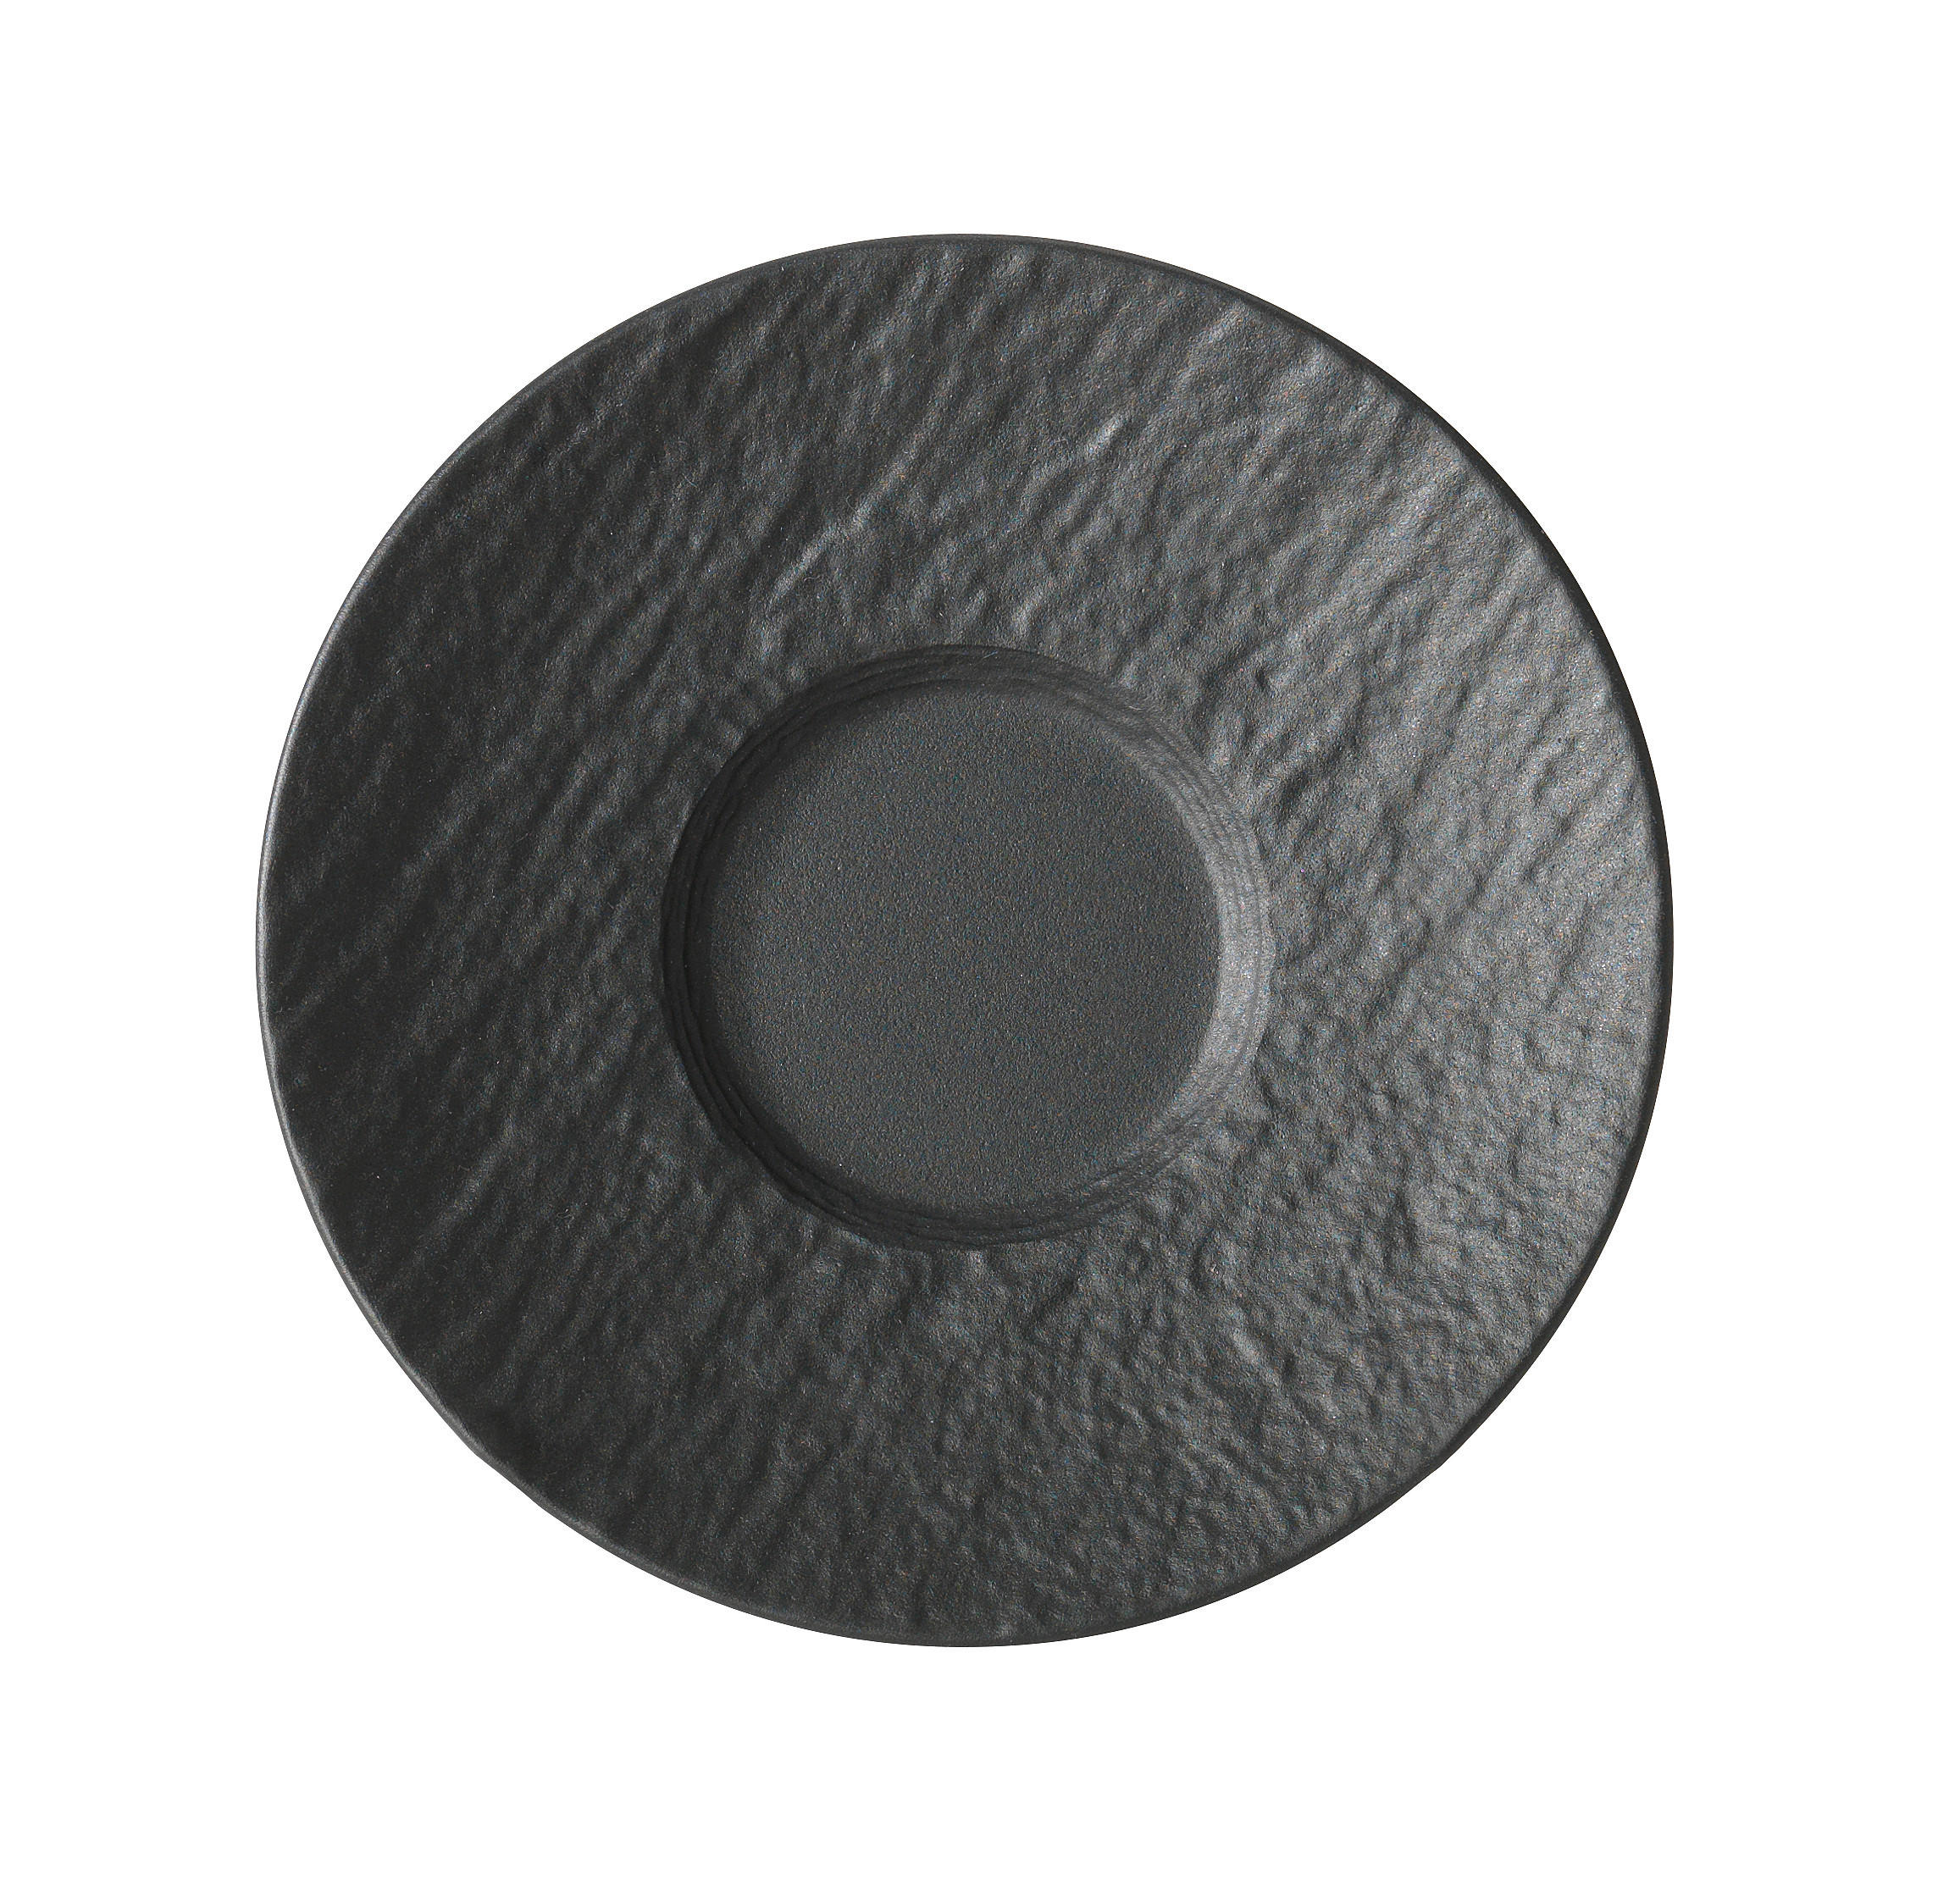 ESPRESSO-UNTERTASSE MANUFACTURE ROCK 12 cm  - Schwarz, Design, Keramik (12cm) - Villeroy & Boch